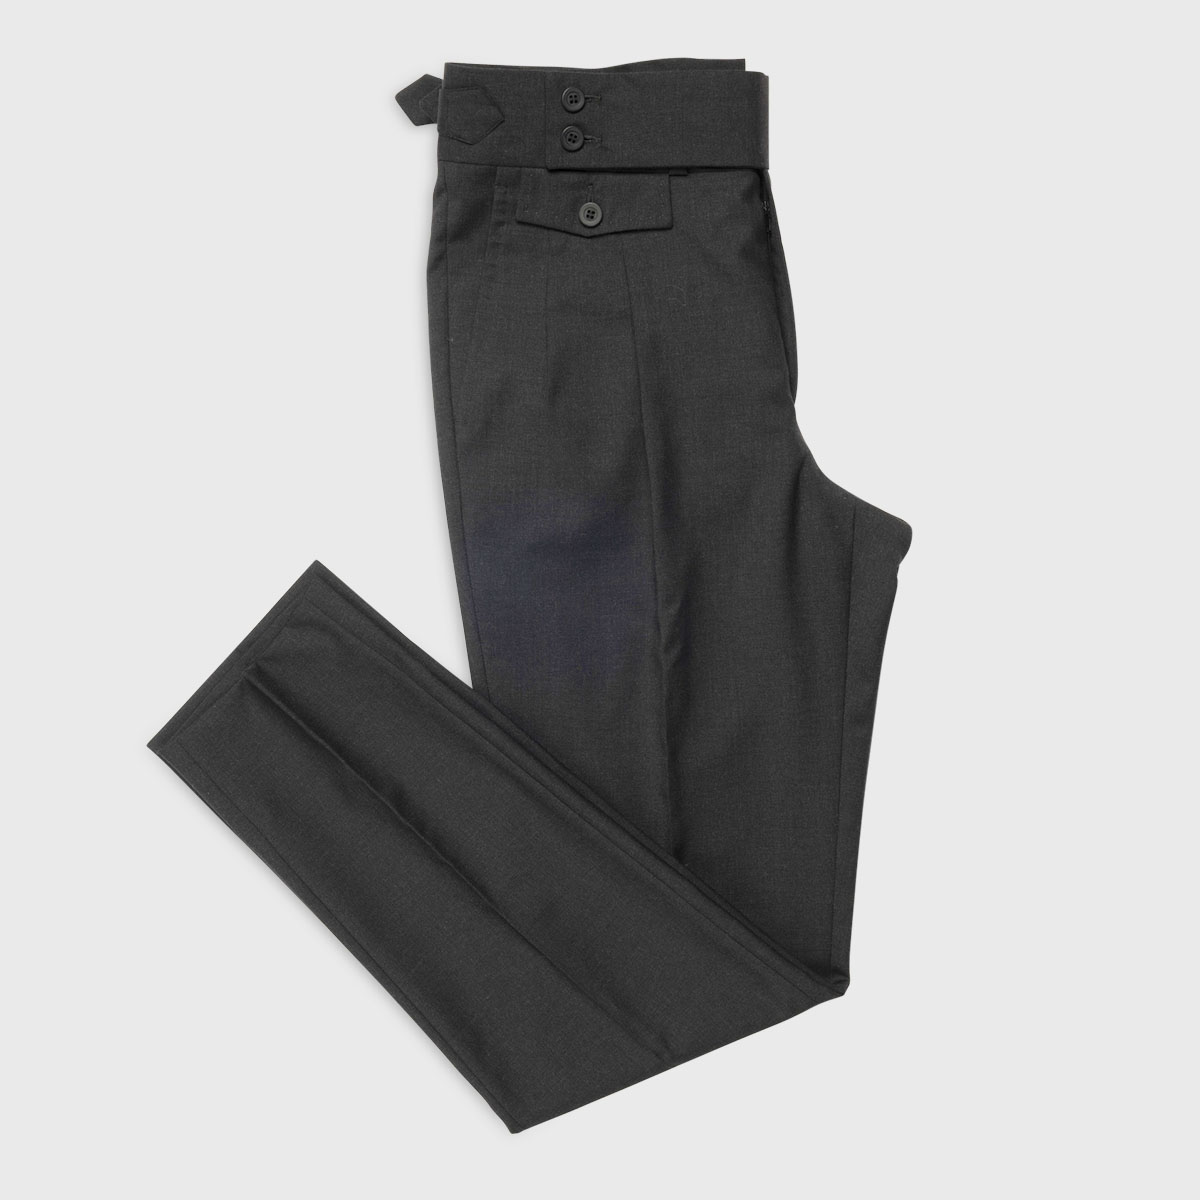 2 Pleats Super 100’s Wool Trousers in Dark Gray Sartoria Lavore on sale 2022